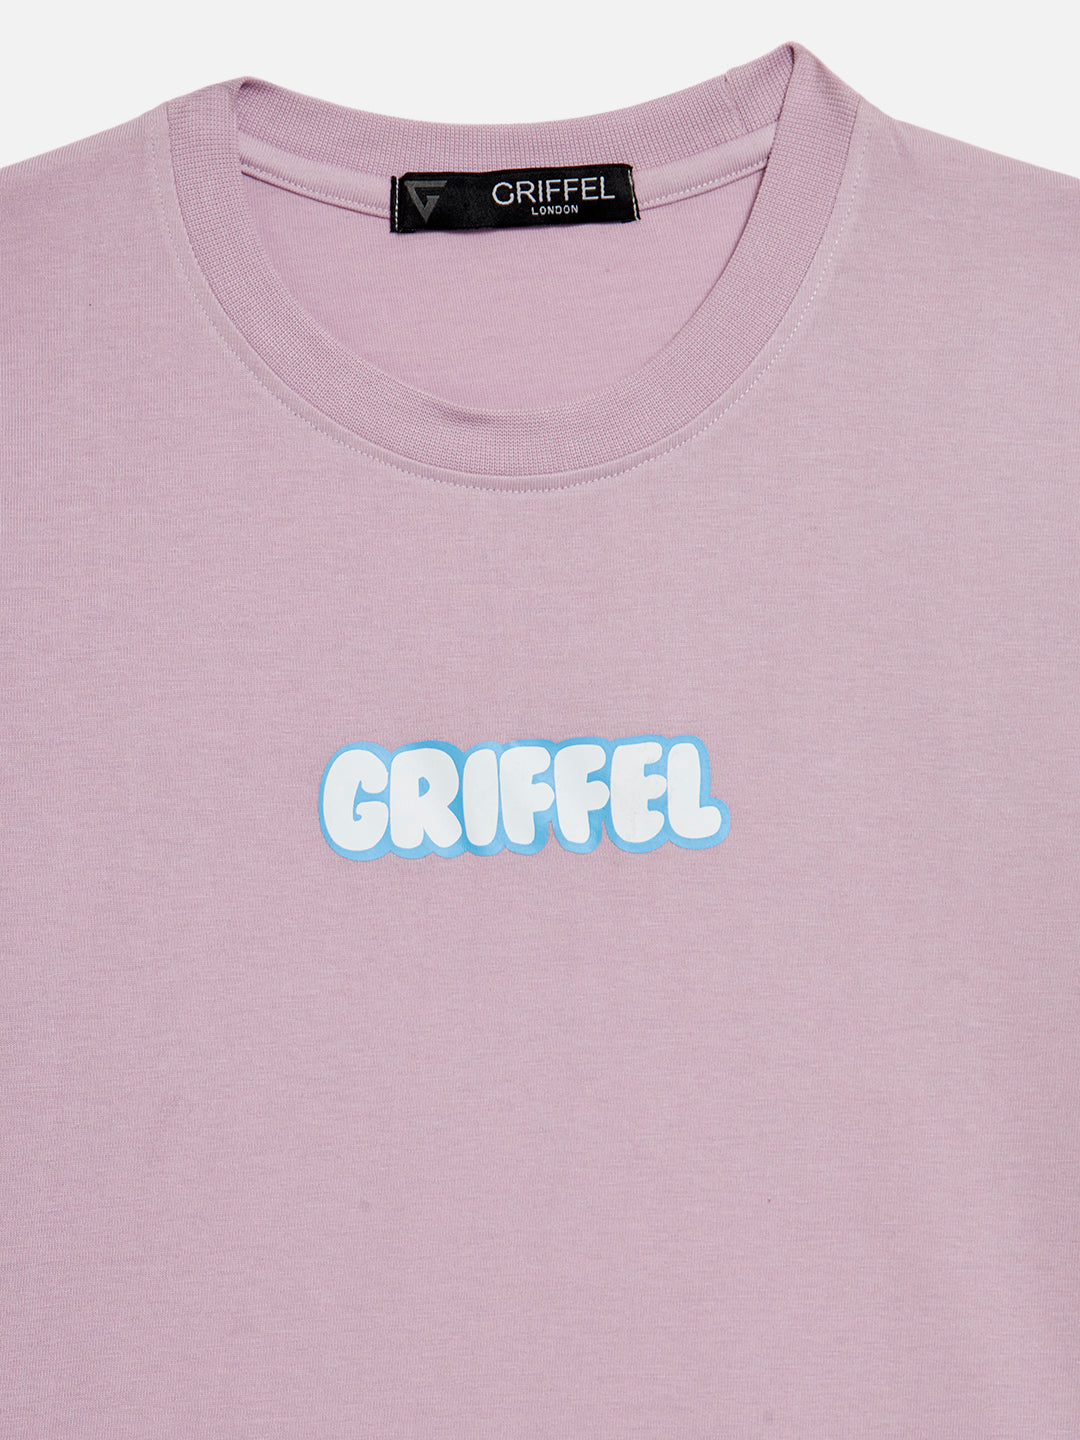 GRIFFEL Boys Kids Light Purplel Co-Ord T-shirt and Short Set